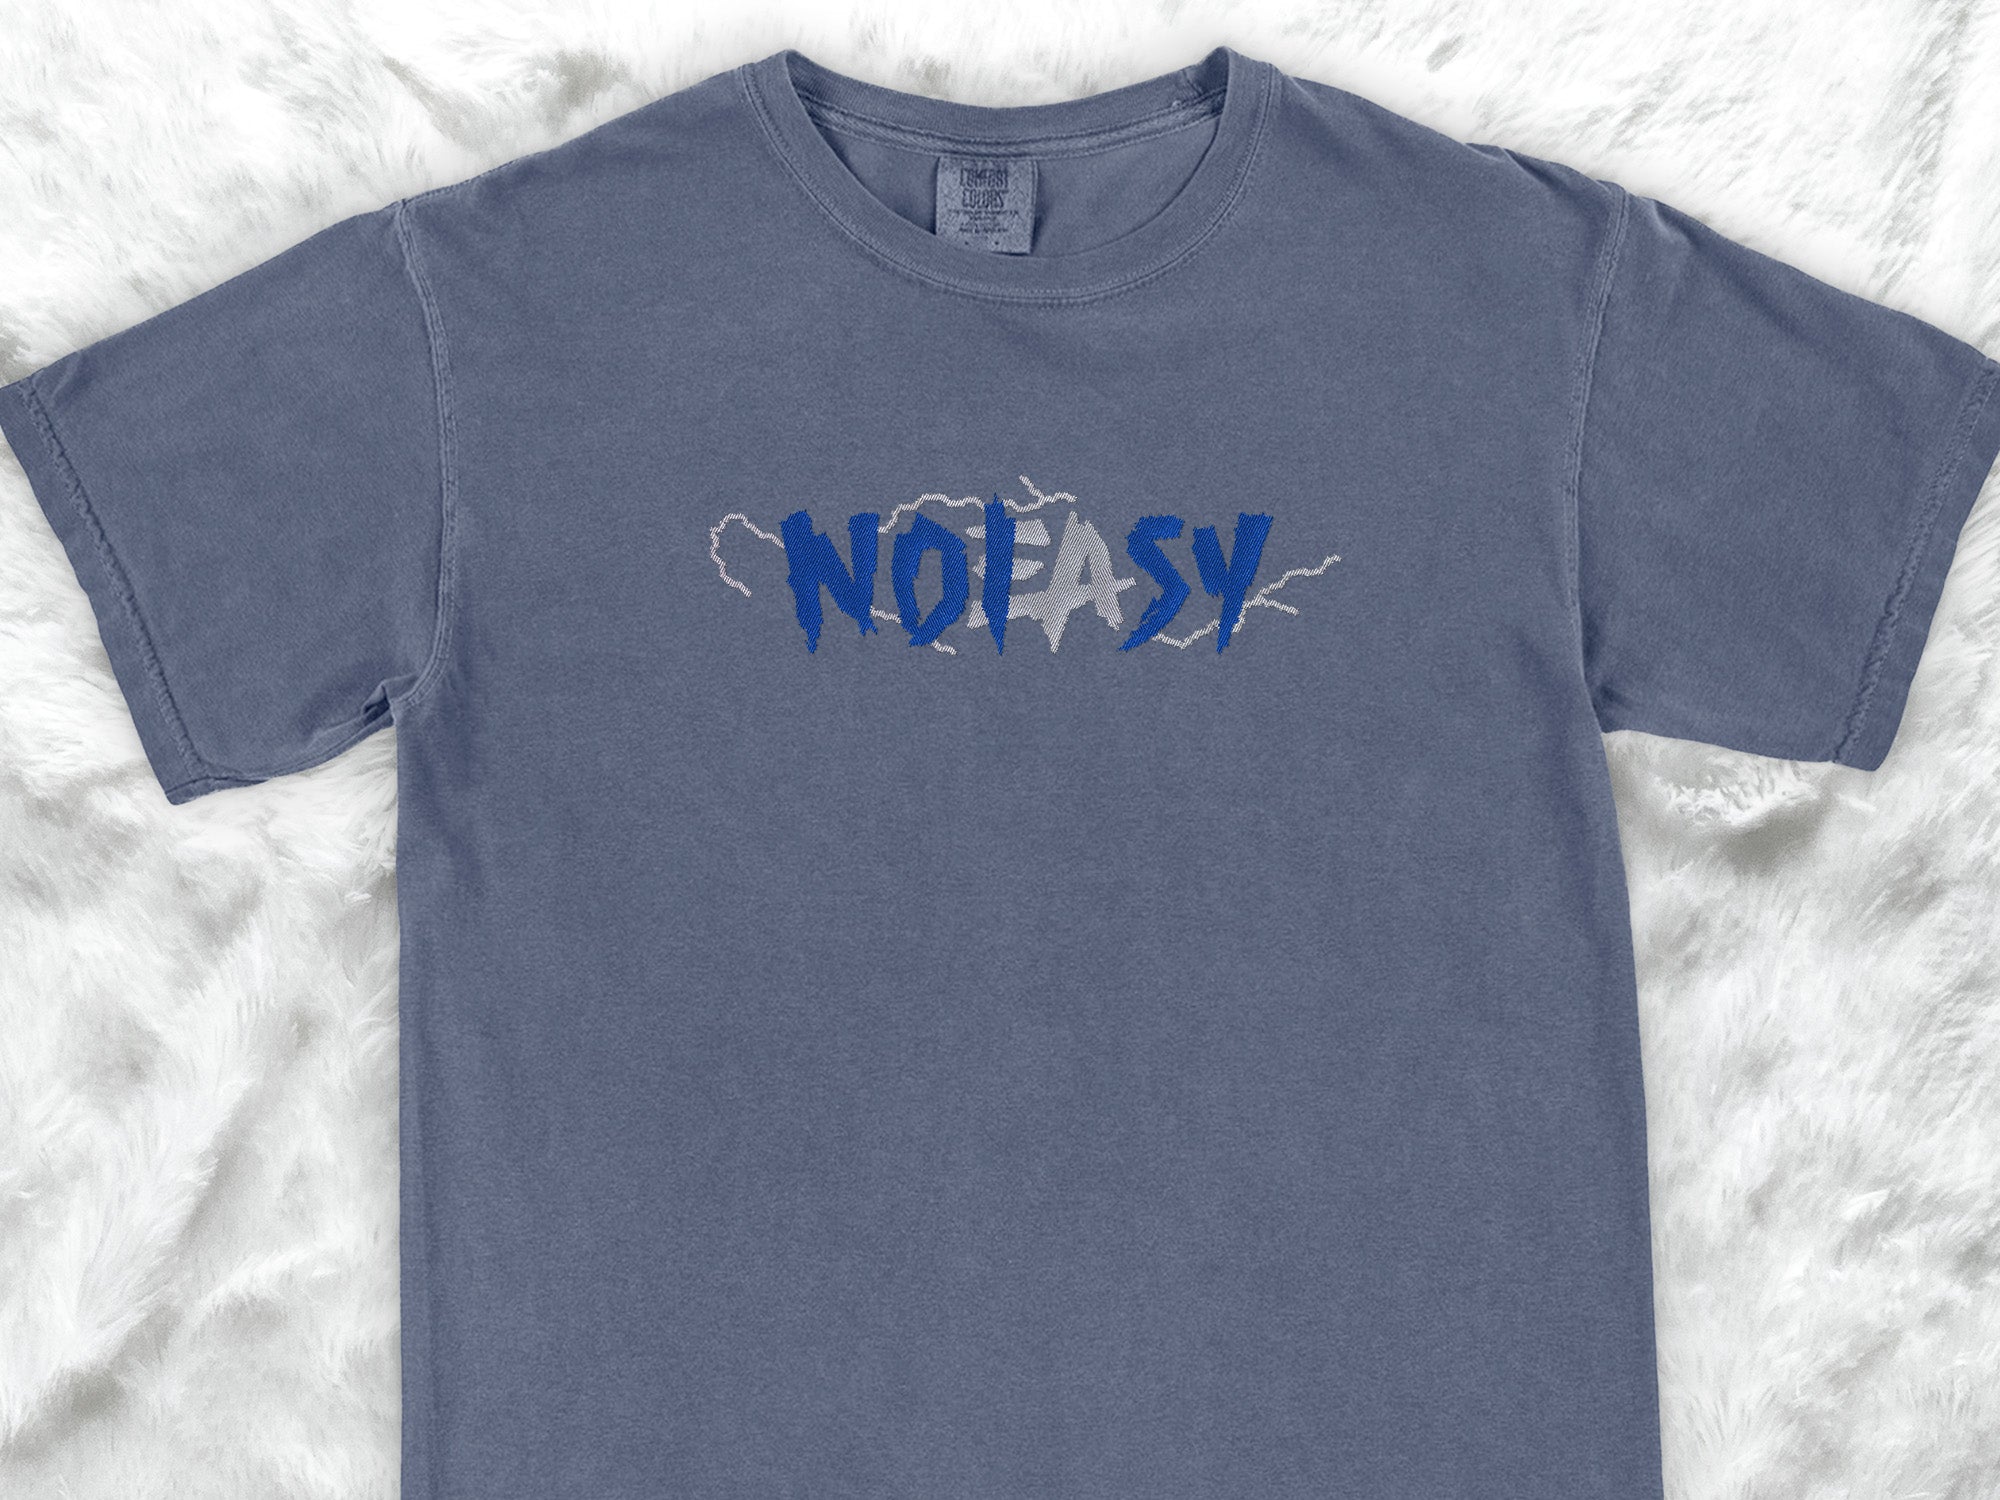 No Easy (NOISY) Embroidery Shirts and Sweatshirts